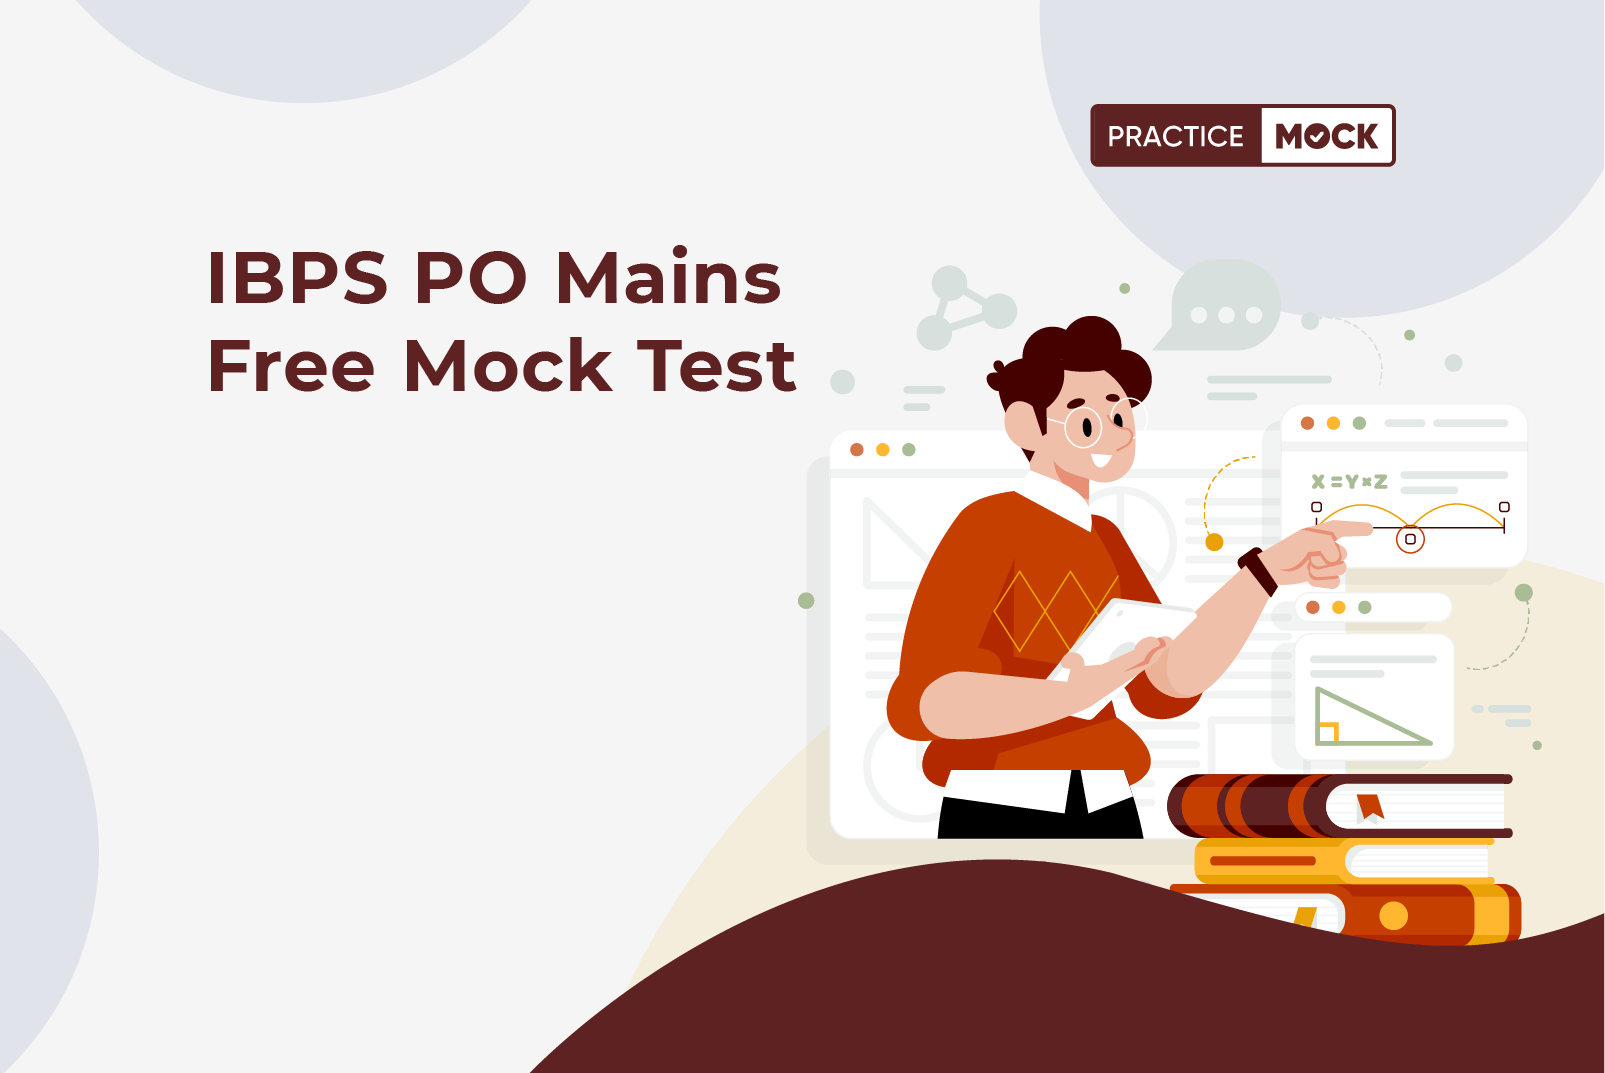 IBPS PO Mains free mock test